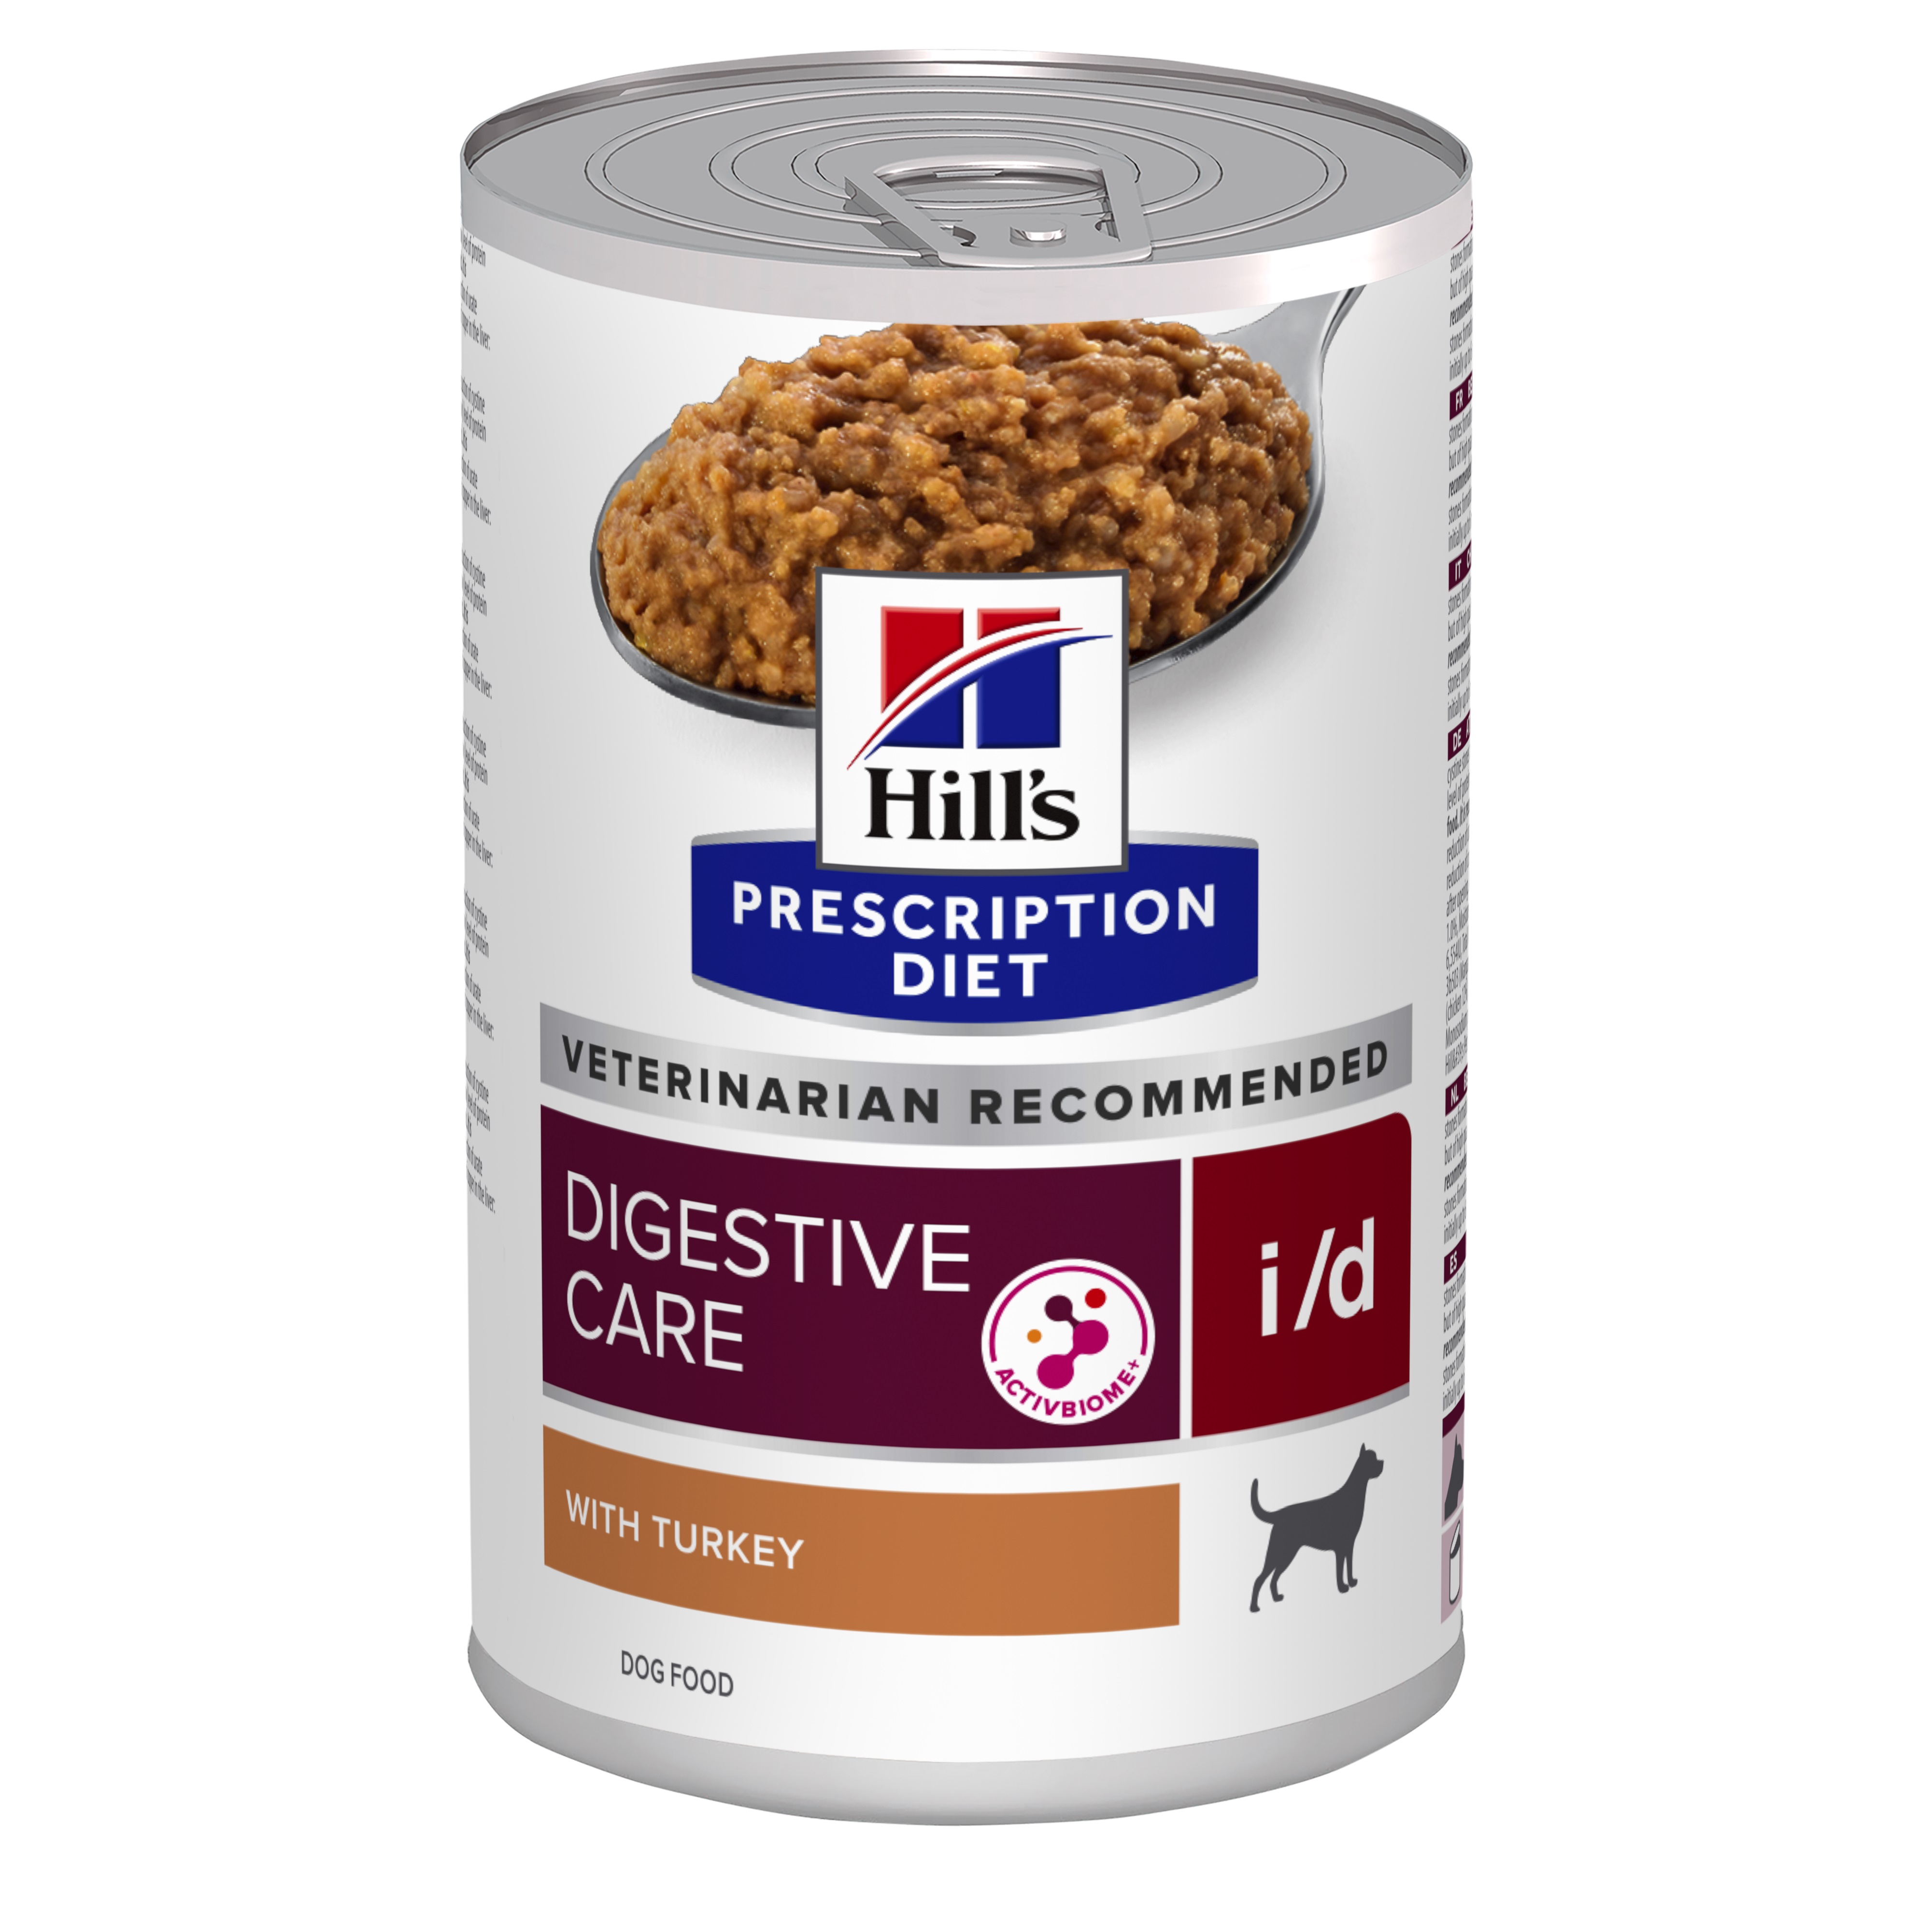 שימורי i/d | Hill's Prescription Diet דייג'סטיב קייר +ActiveBiome לכלב, 360 גר'